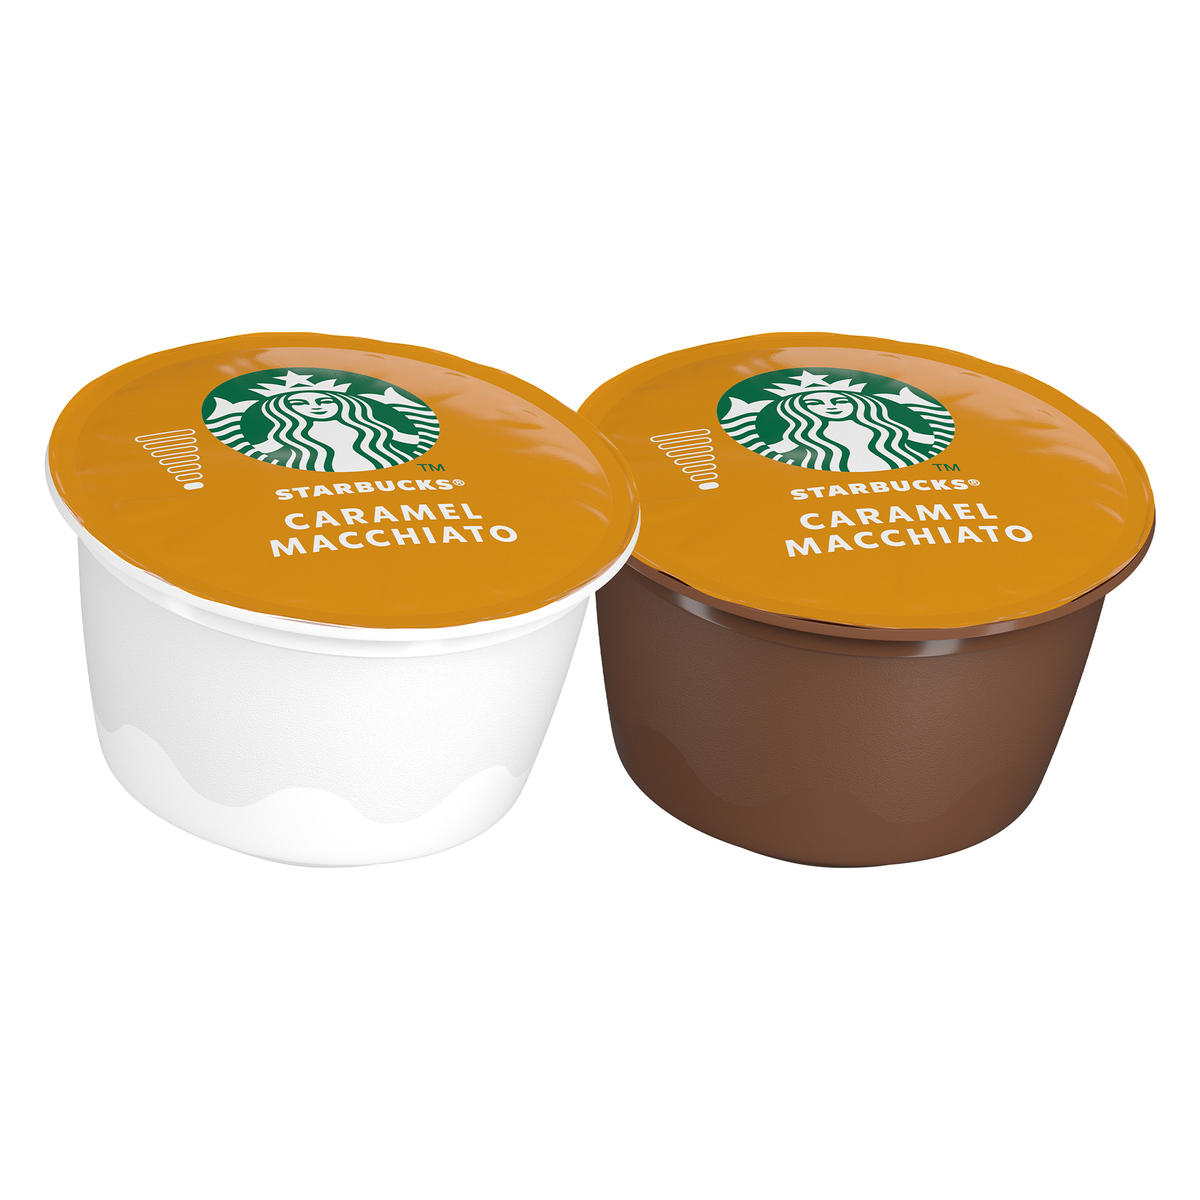 Starbucks Caramel Macchiato by Nescafe Dolce Gusto Coffee Pods 127.8 g